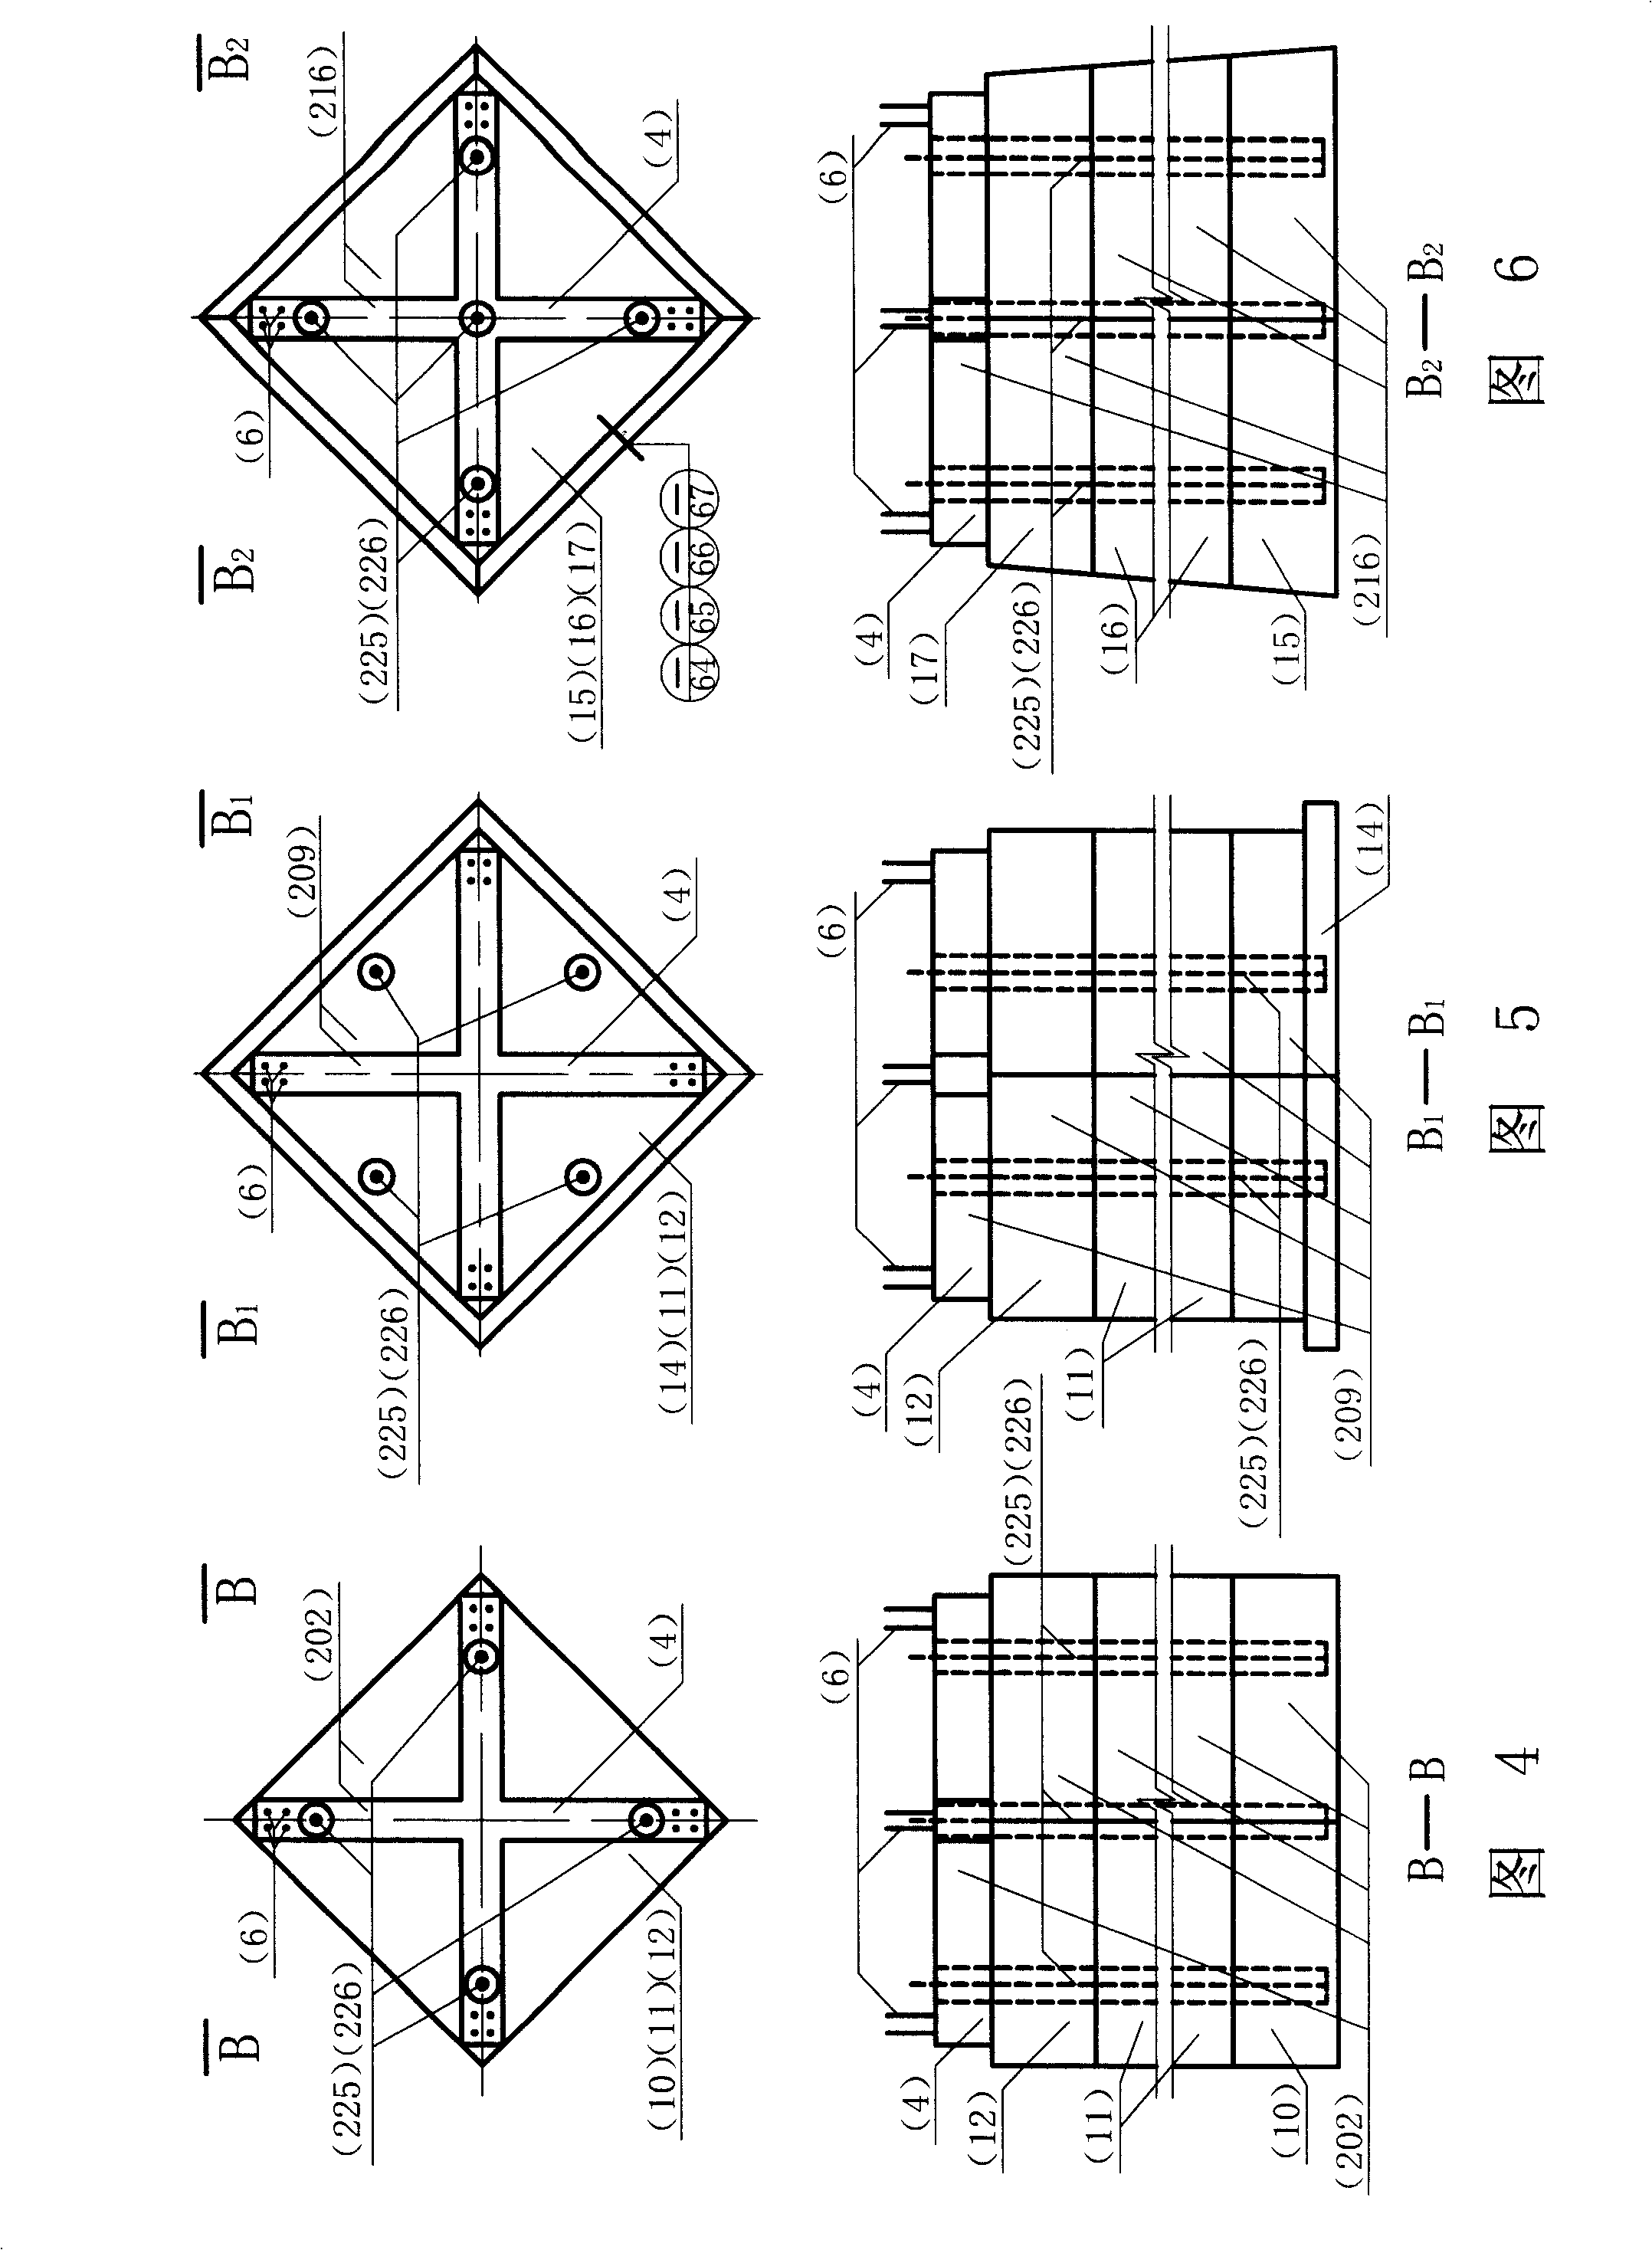 Vertical combined novel foundation of mast mechanical equipment